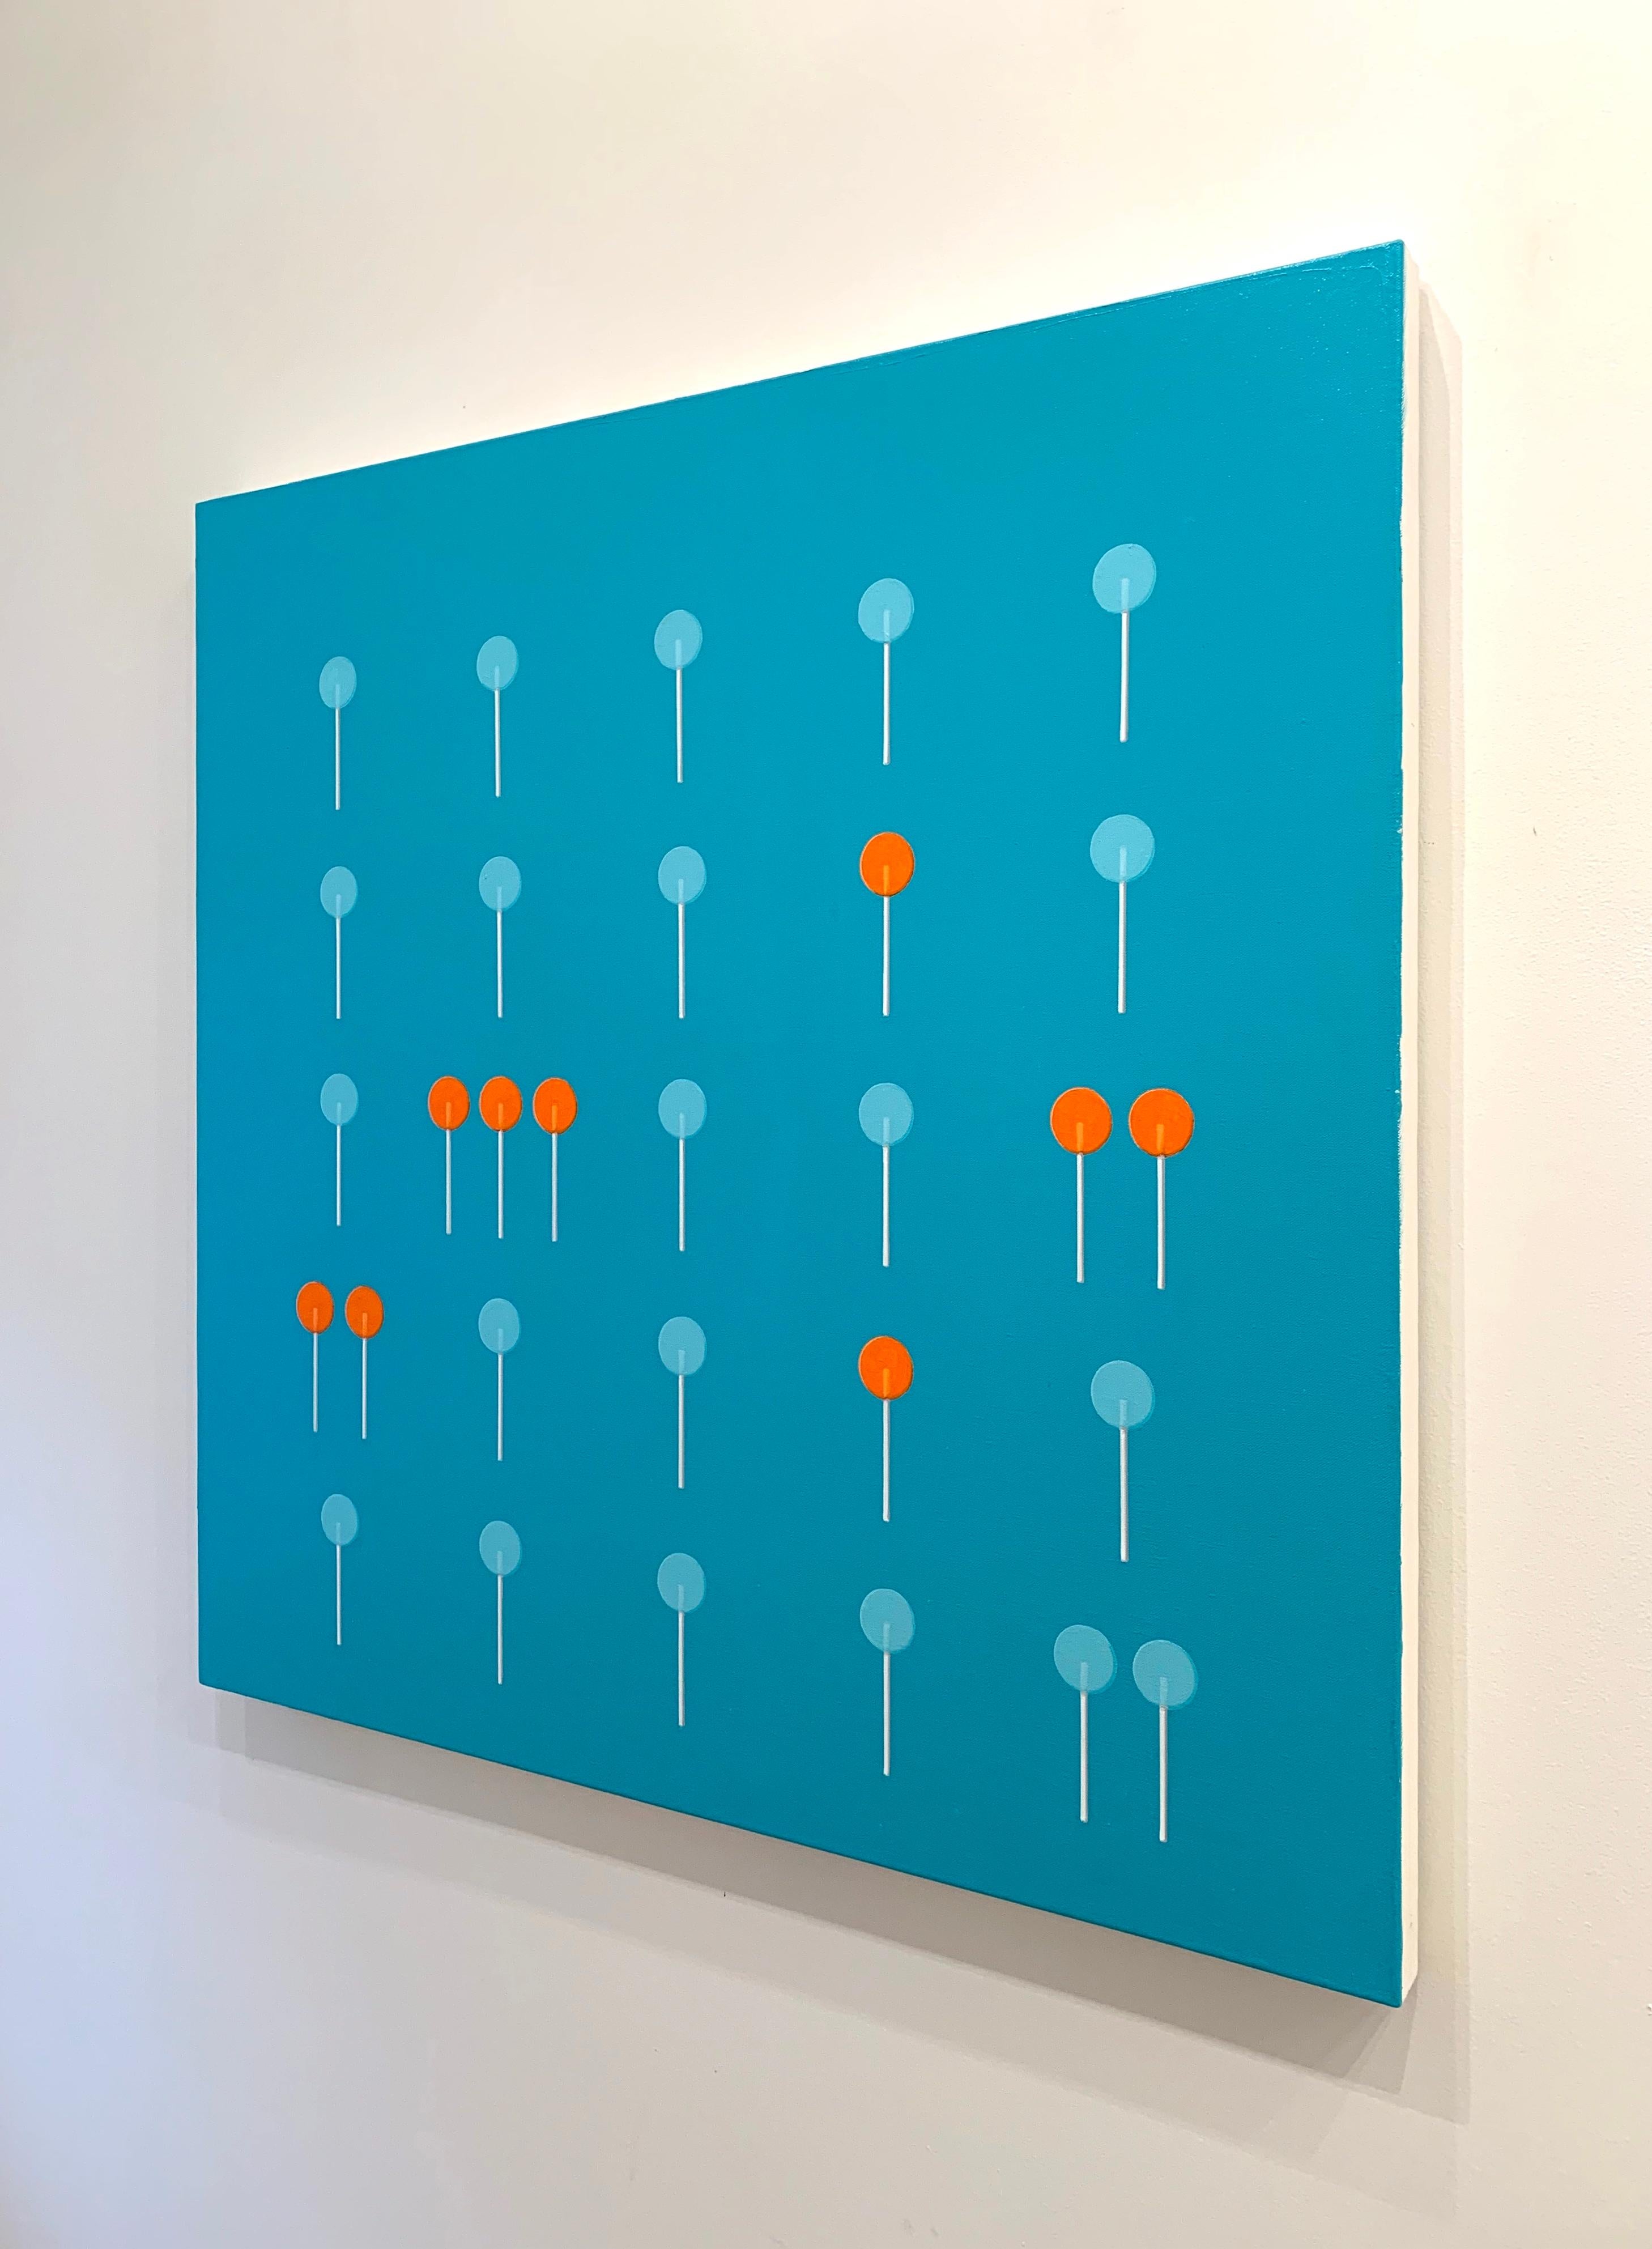 Lollipops - Painting by Stephen Bezas